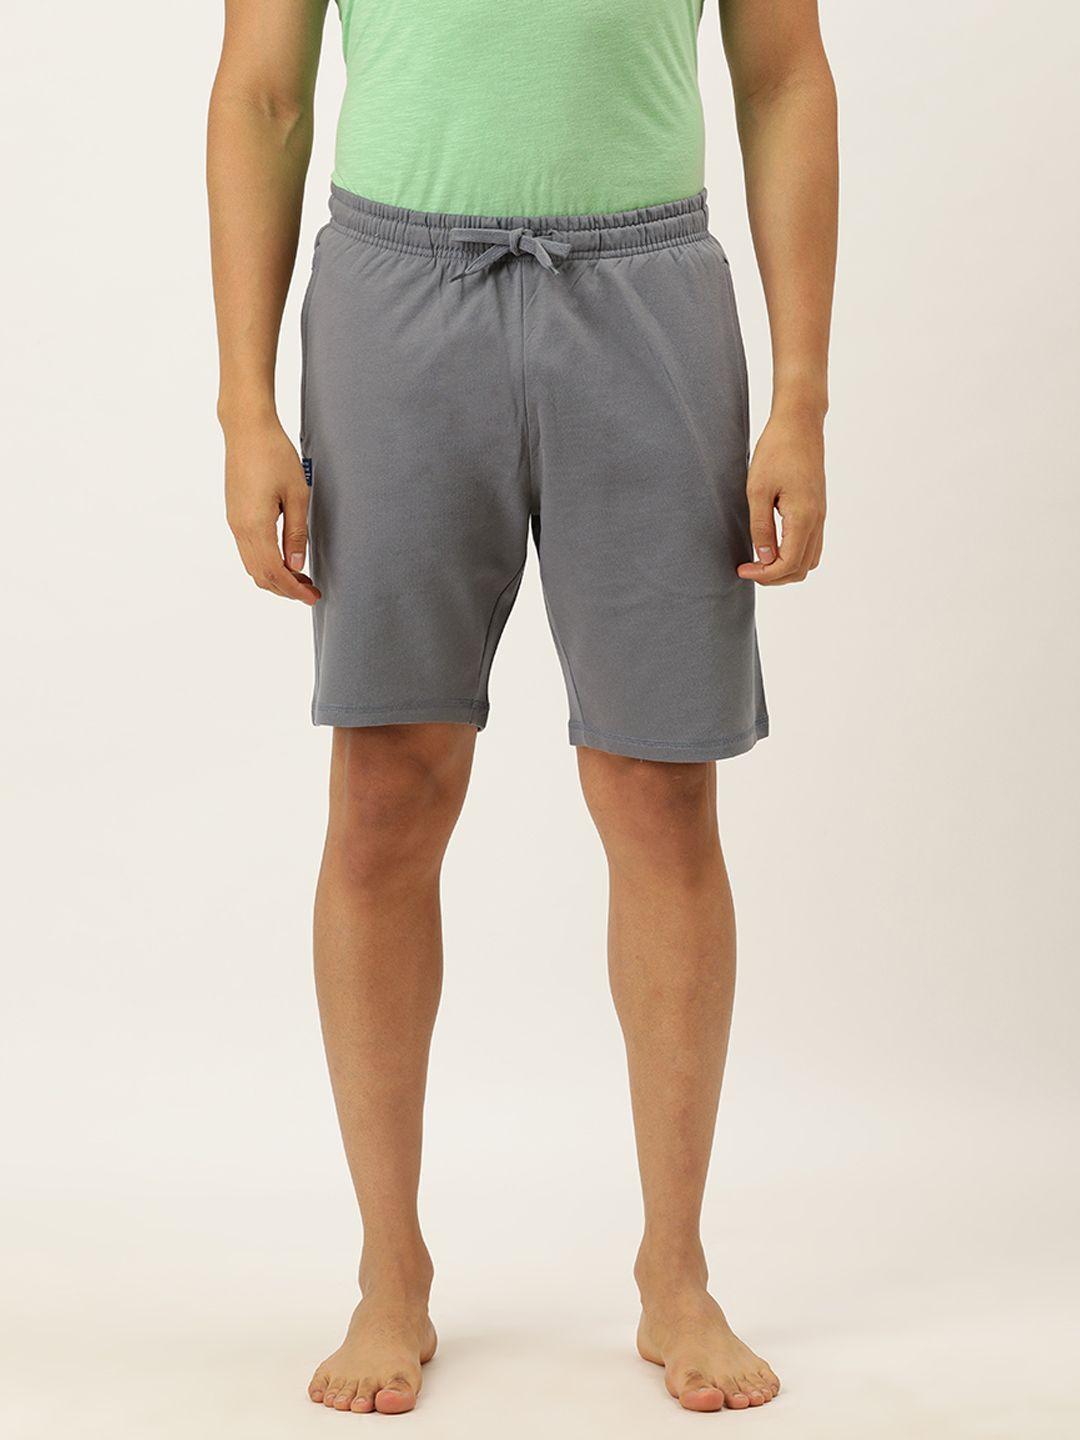 peter england men grey mid-rise regular shorts